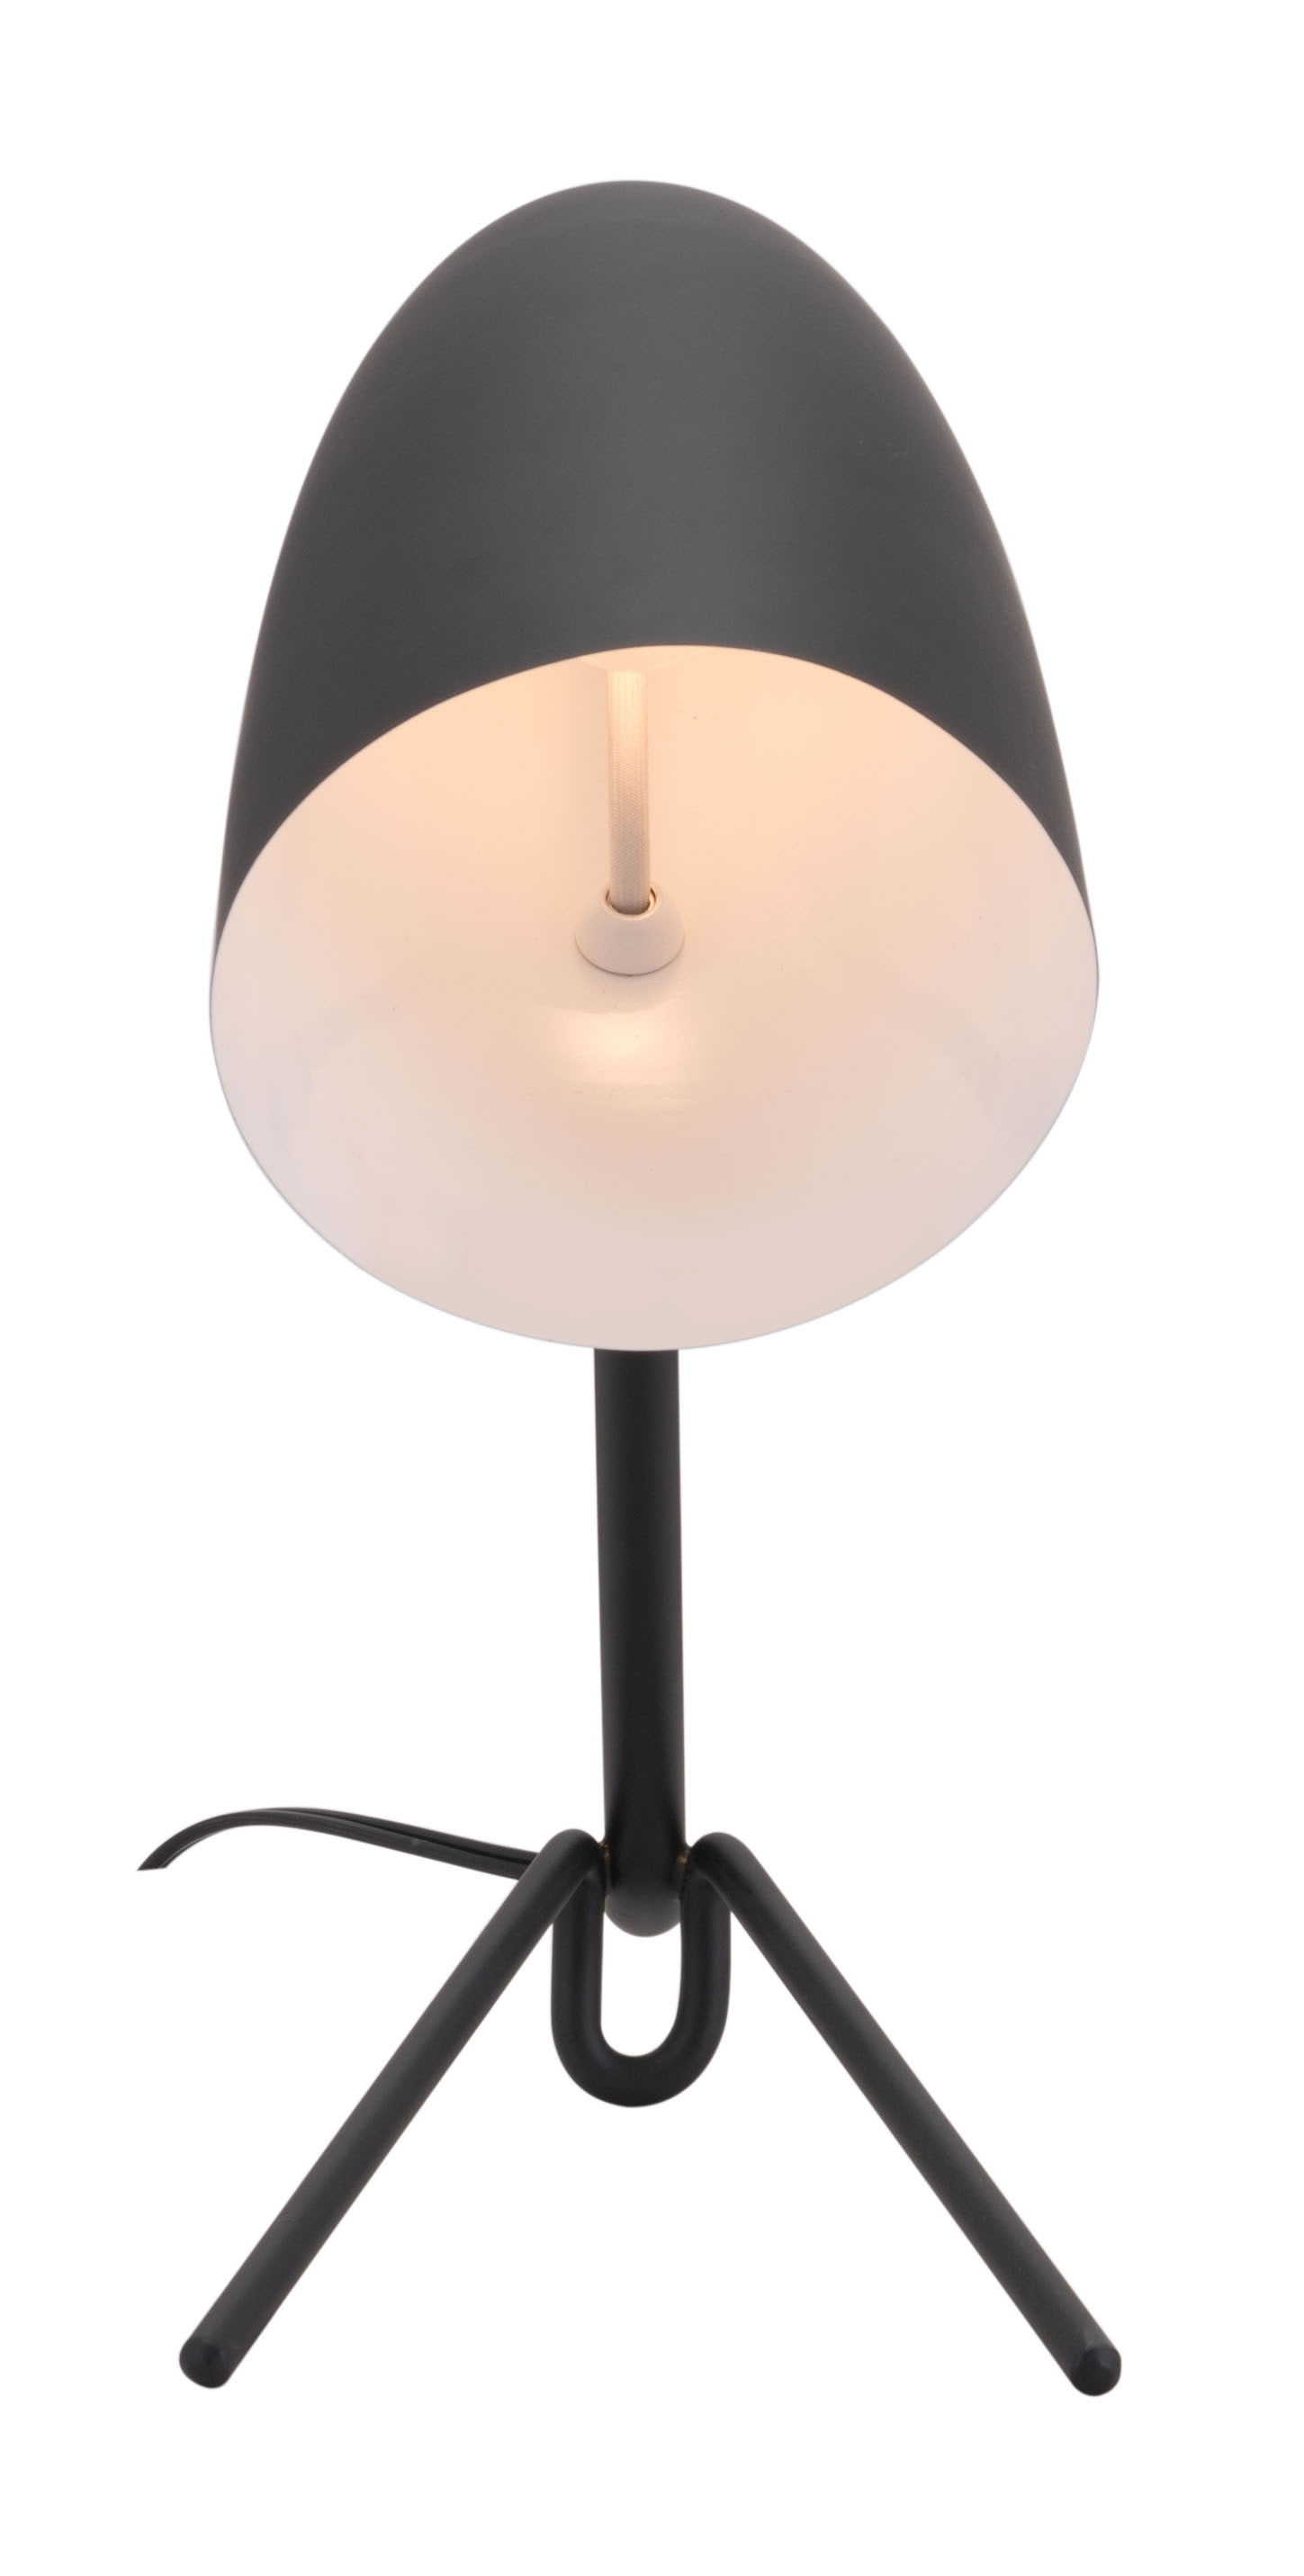 15.4" x 6.7" x 15" Matte Black, Steel, Table Lamp